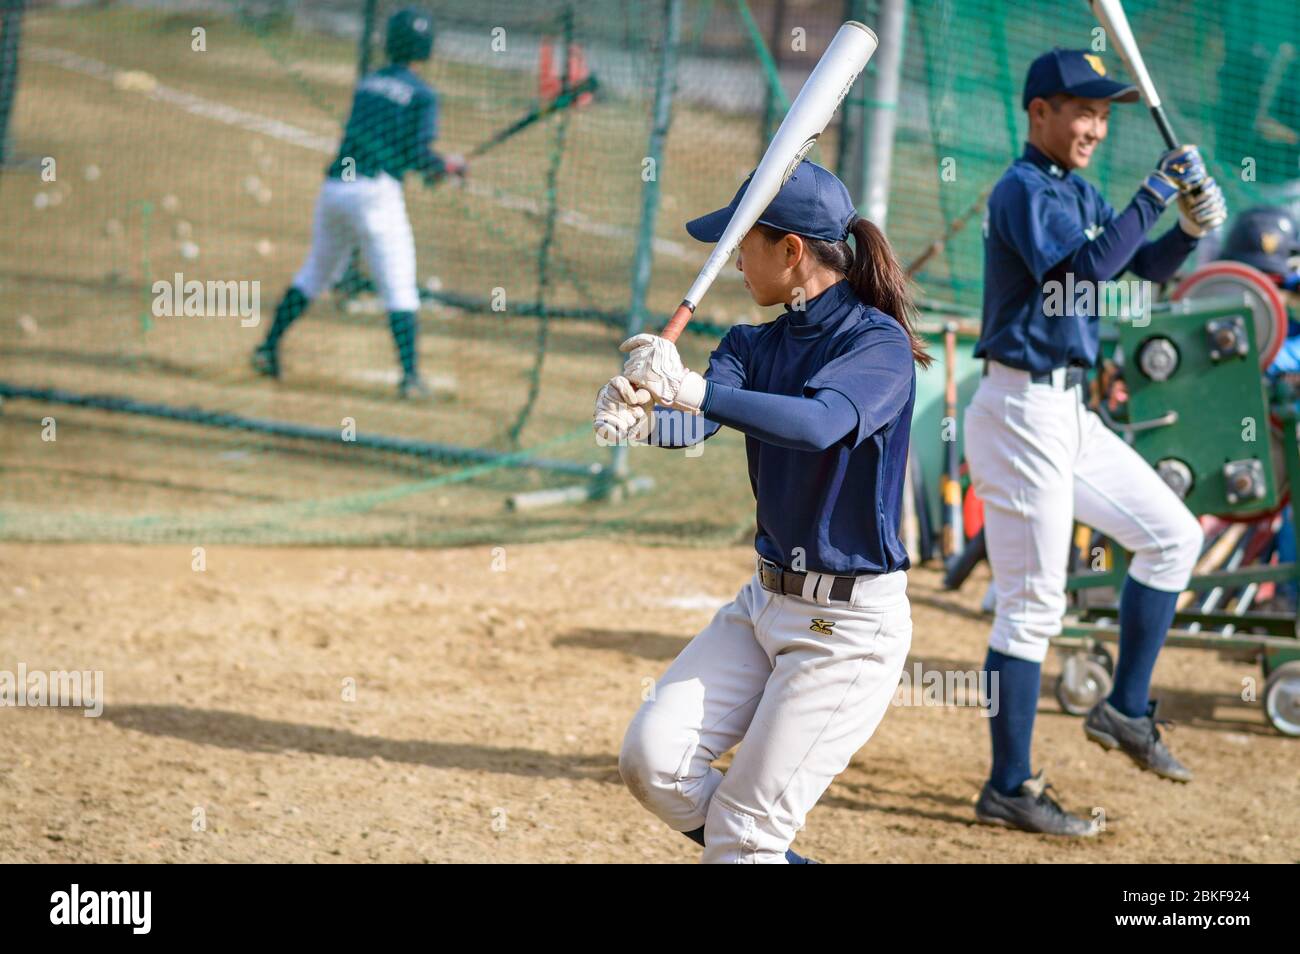 Osaka / Japan - November 25, 2017: Baseball player girl practicing baseball bat swing in Osaka, Japan Stock Photo